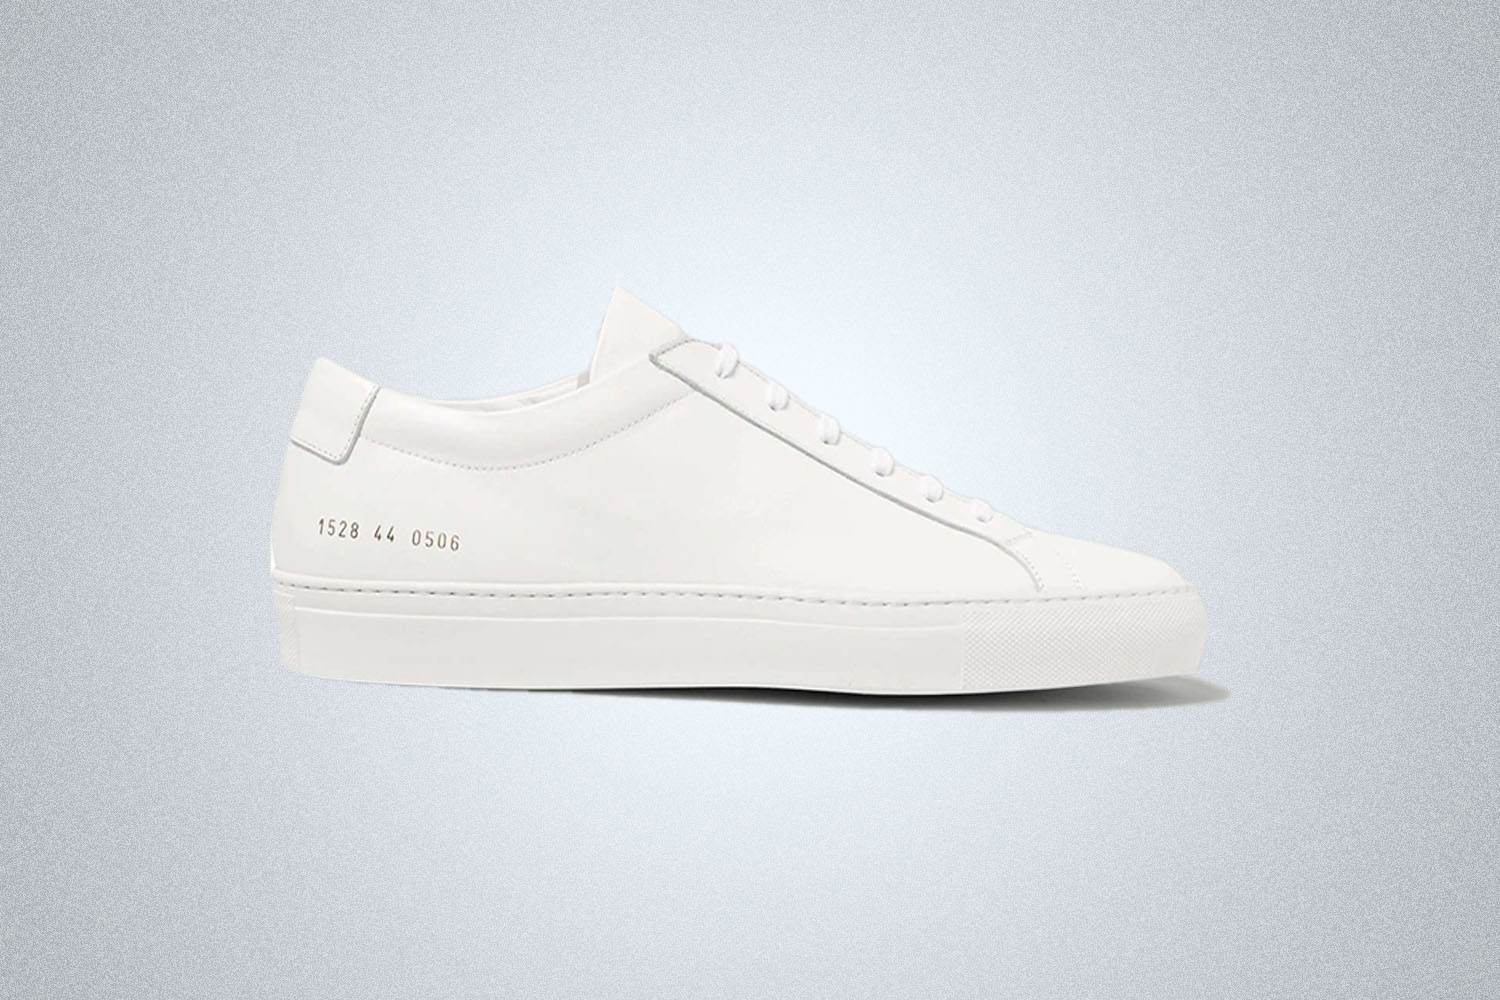 a white shoe on a light grey background